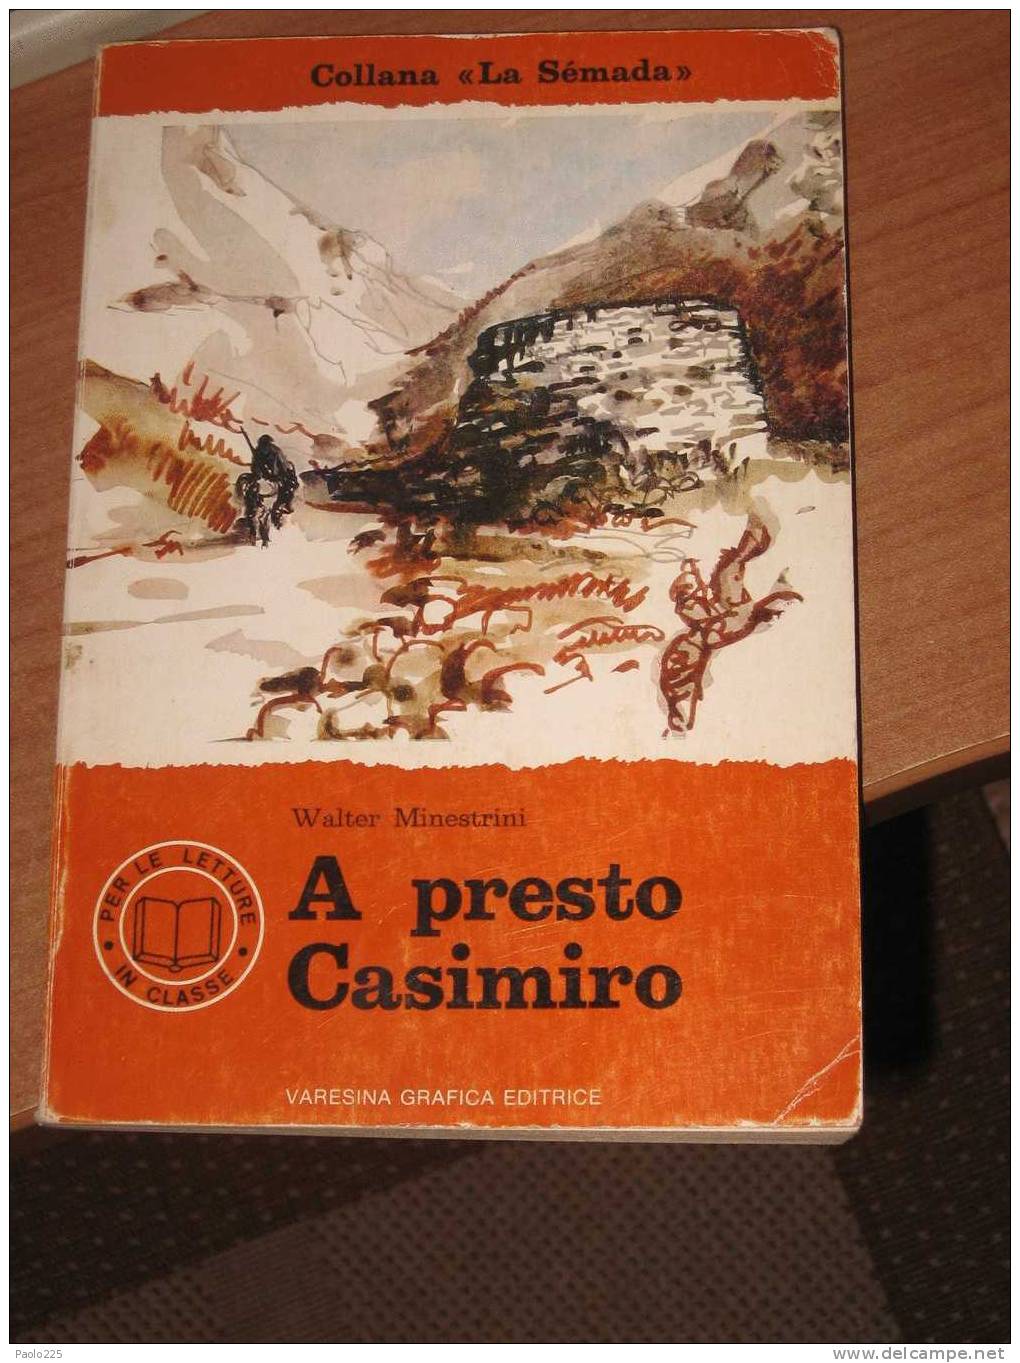 A PRESTO CASIMIRO - MINESTRINI WALTER - COLLANA "LA SEMADA" - Sagen En Korte Verhalen